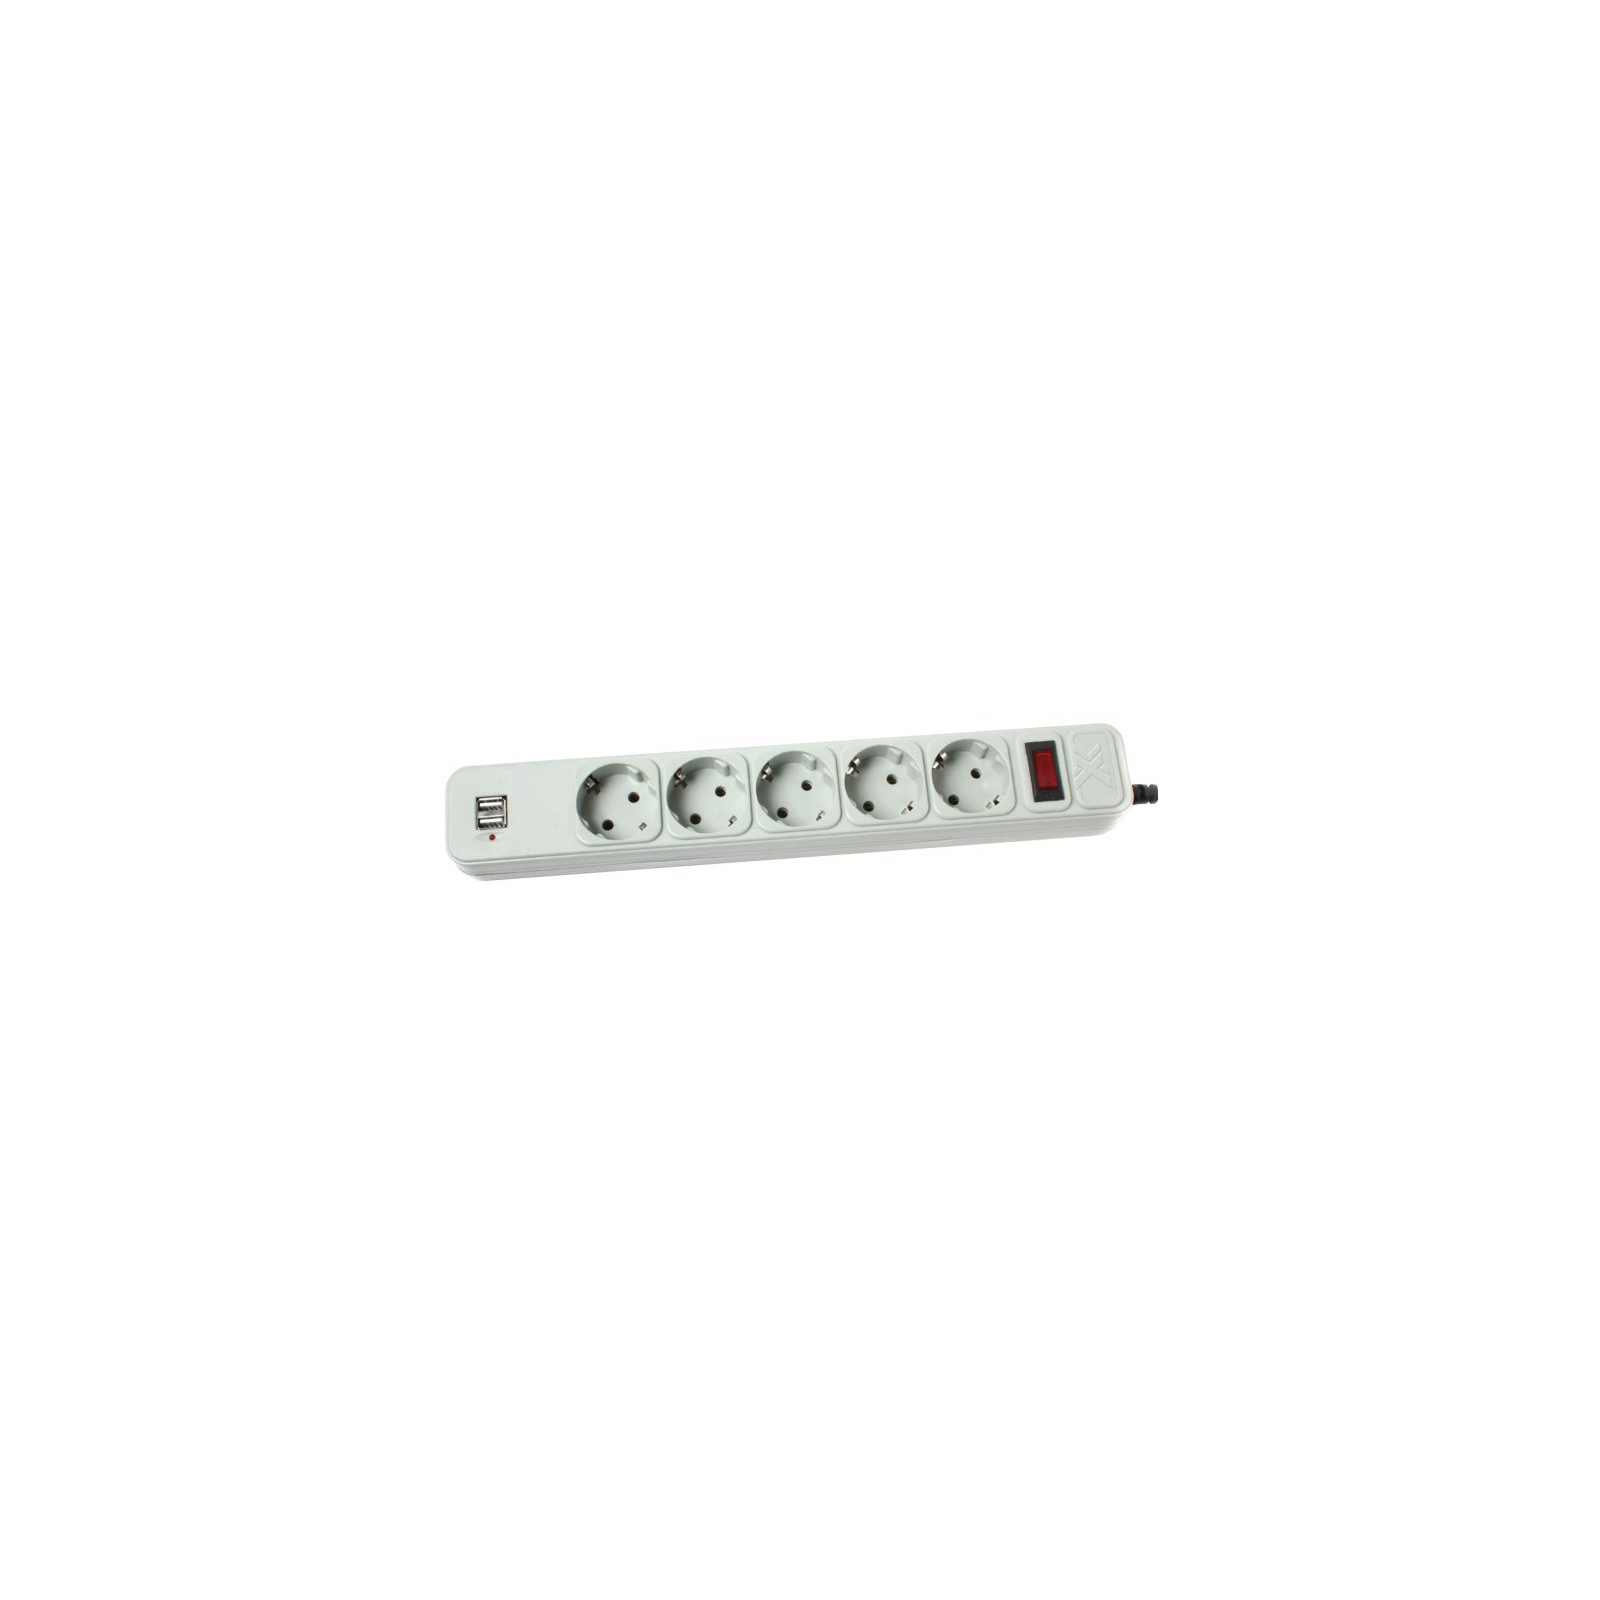 Сетевой фильтр питания Maxxtro PWE-05K-1.8, серый, 1.8 м кабель, 5 розеток, USB зарядка 2А (PWE-05K-1.8)